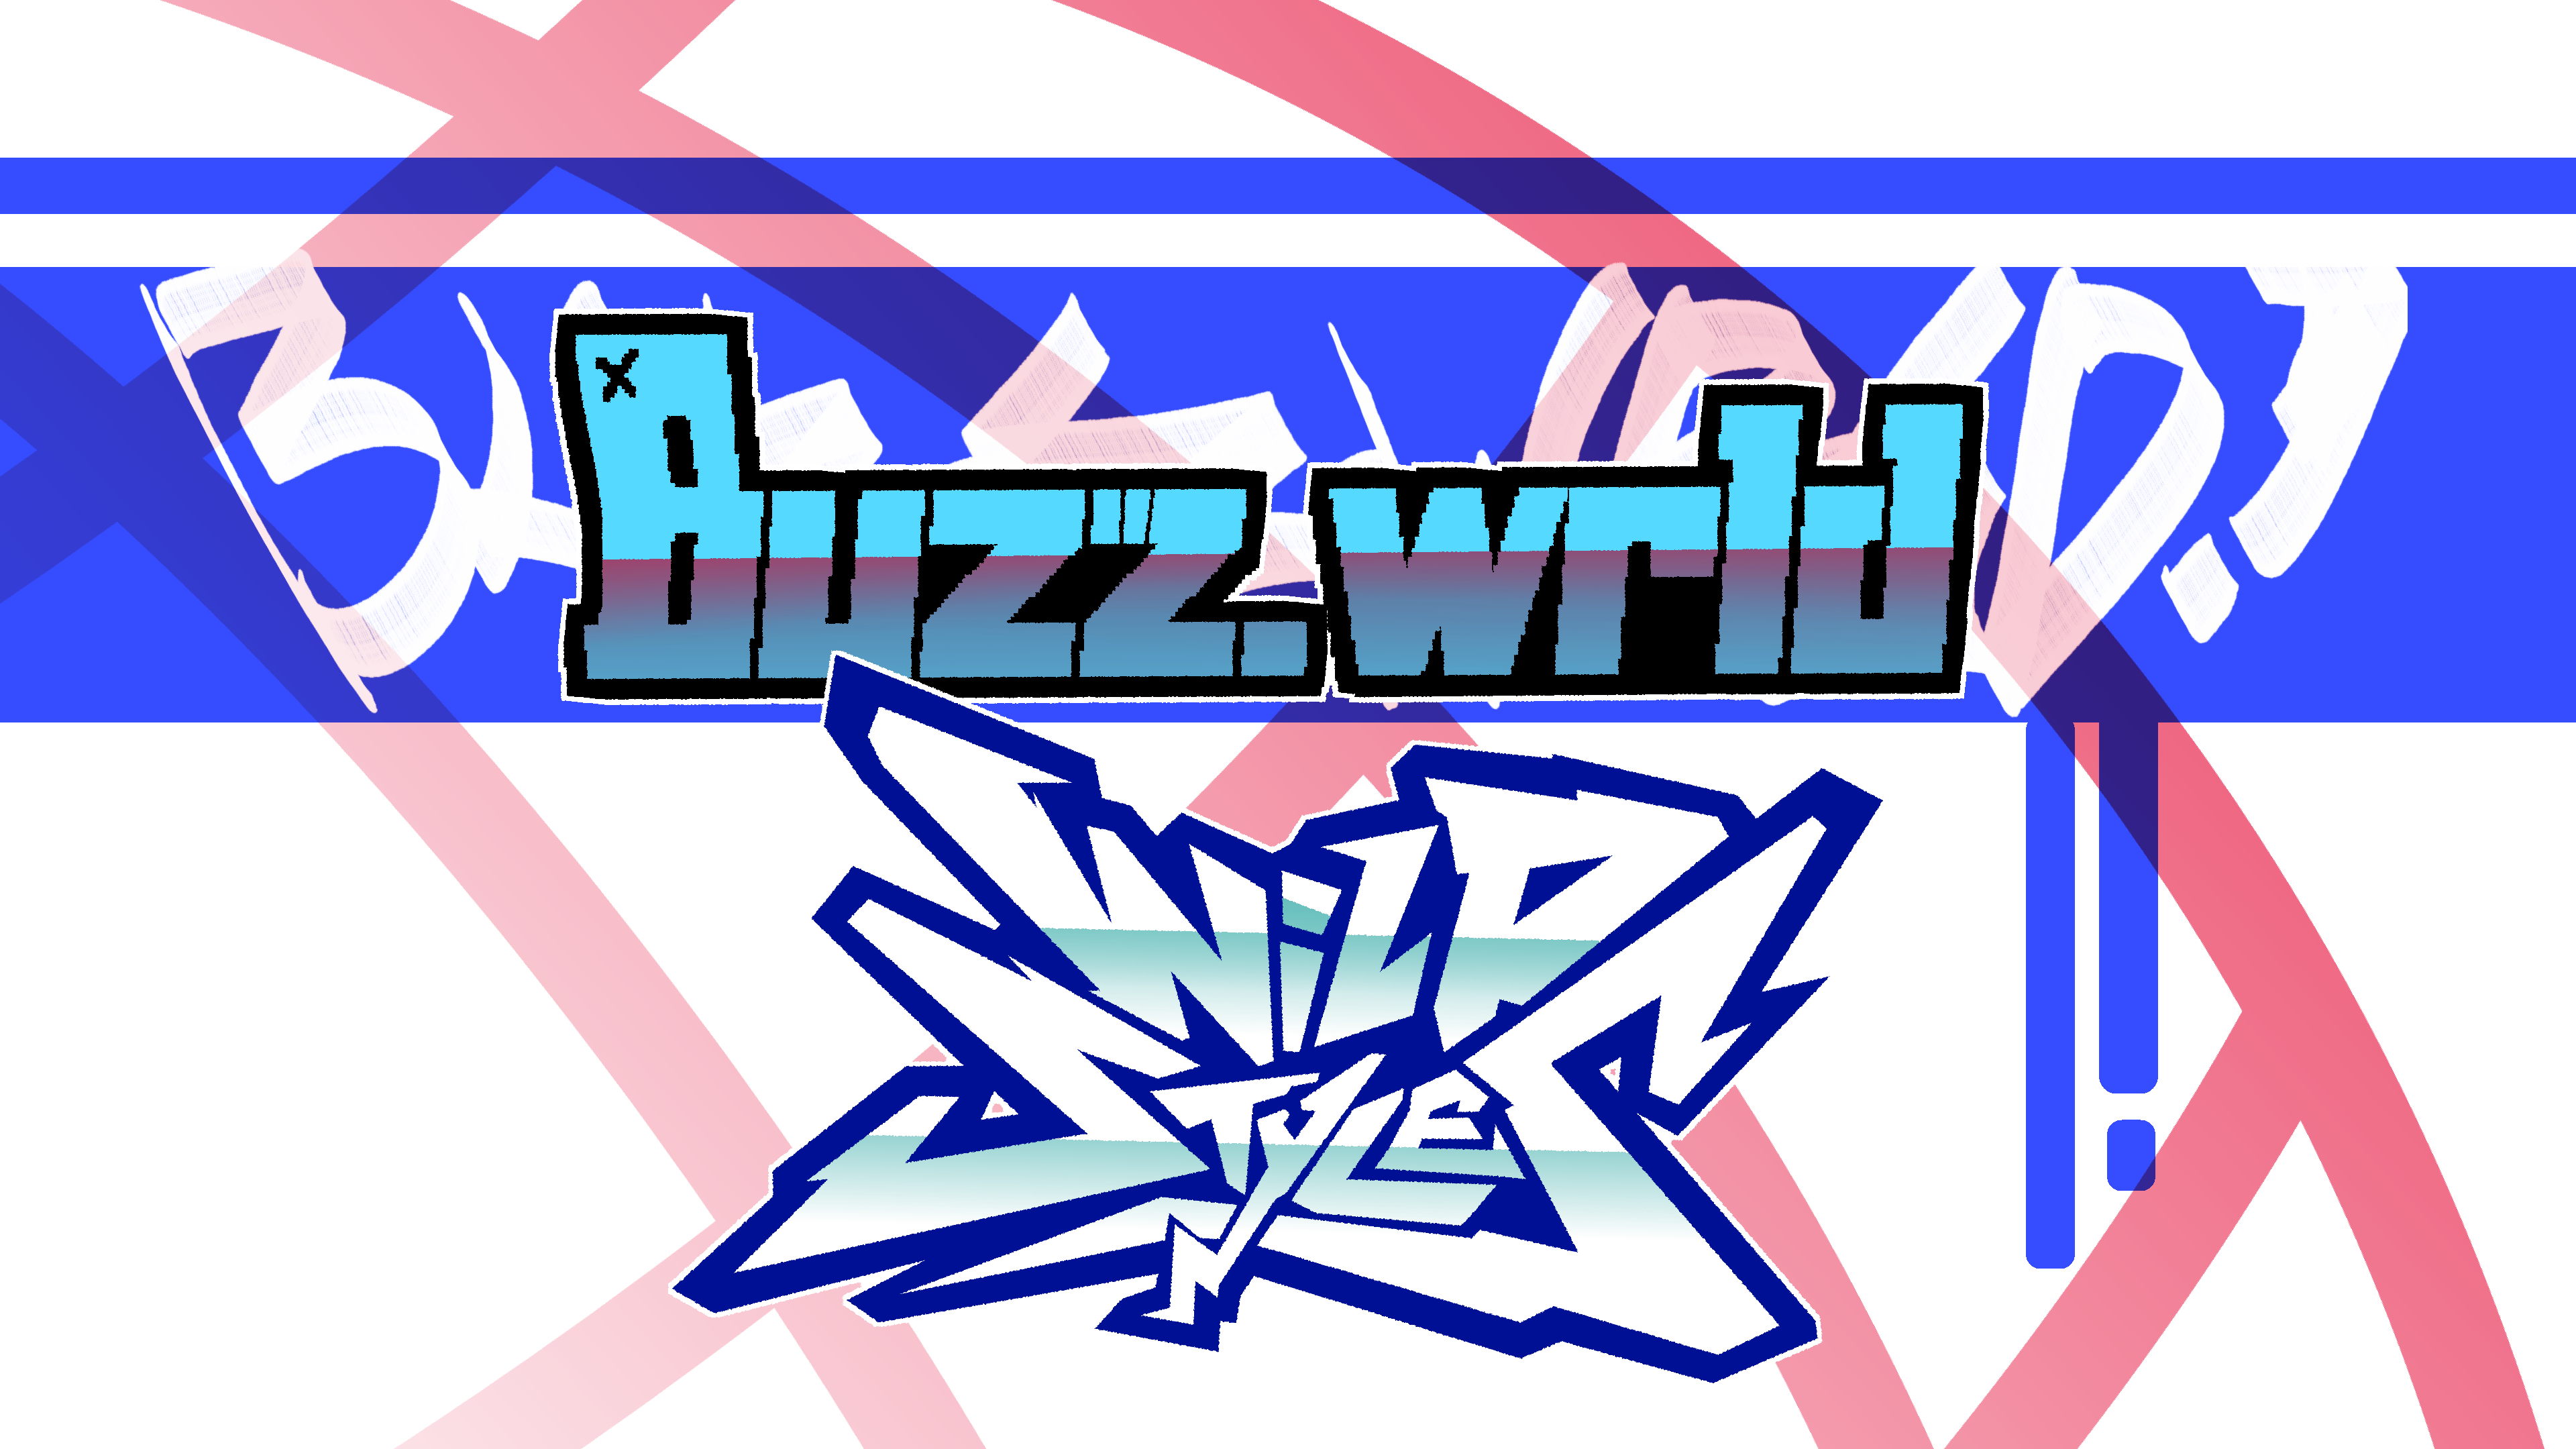 BuzzWRLD #1: WILD STYLES